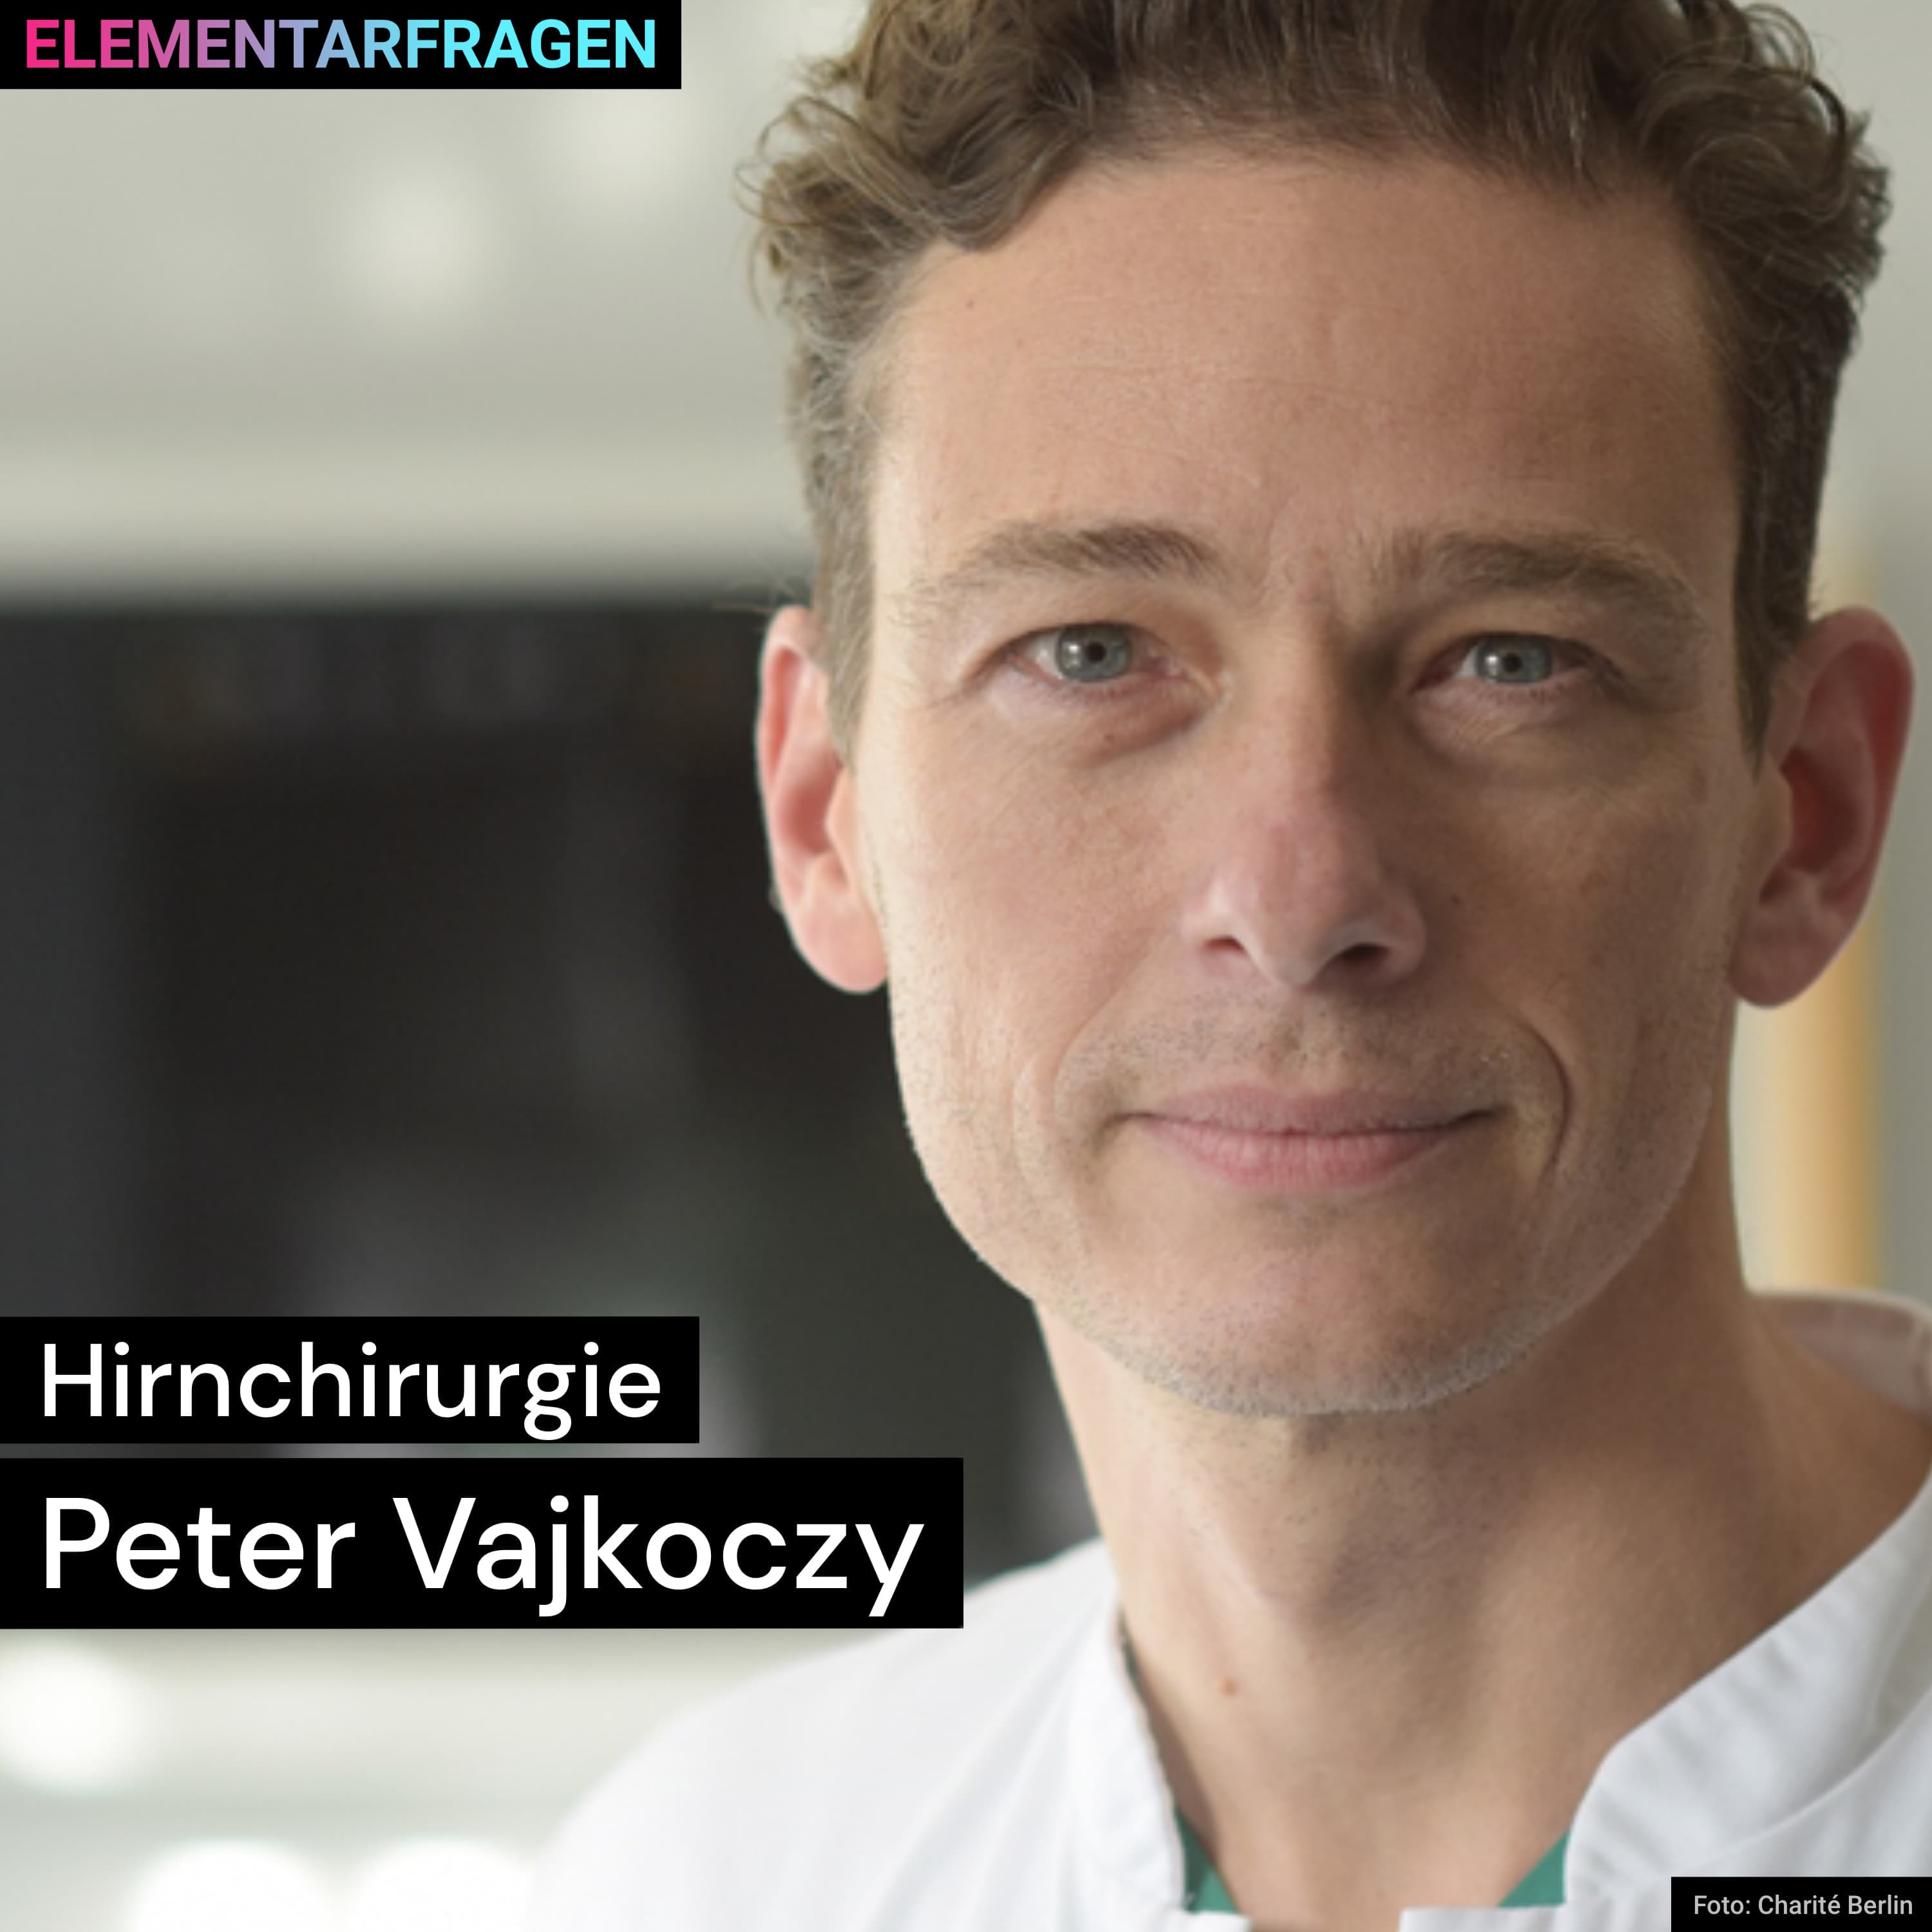 Hirnchirurgie | Peter Vajkoczy